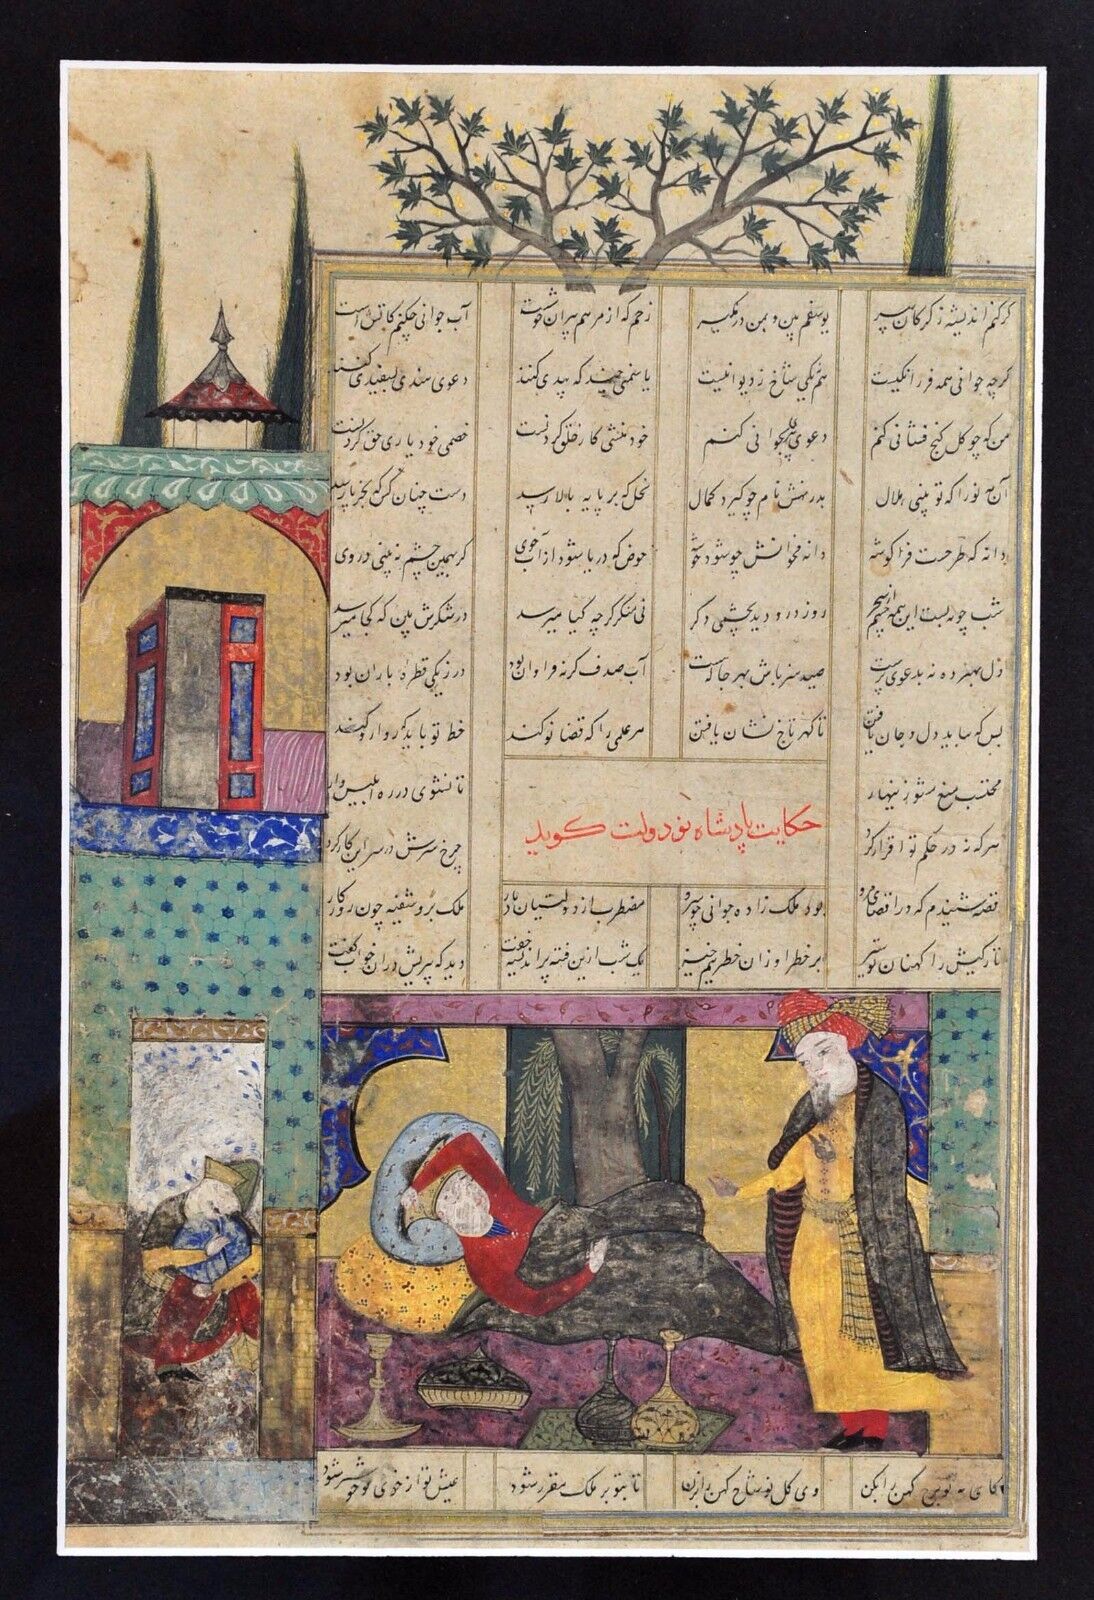 ANTIQUE SAFAVID SHAHNAMEH ISLAMIC PERSIAN MINIATURE PAINTING MANUSCRIPT 1600 AD